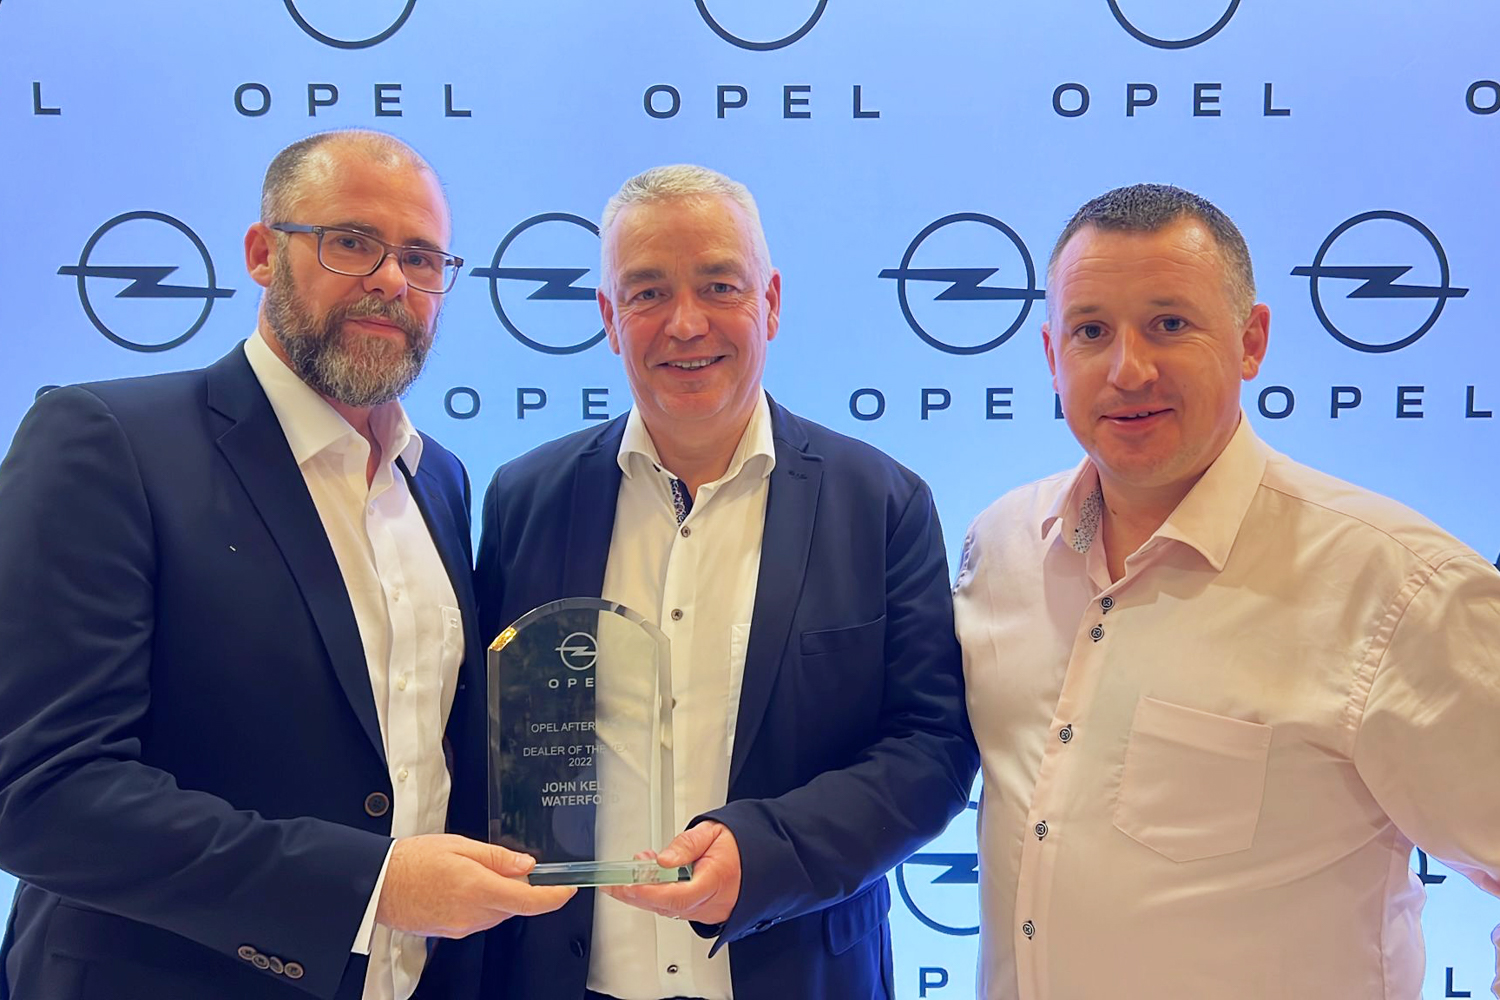 Opel announces dealer awards